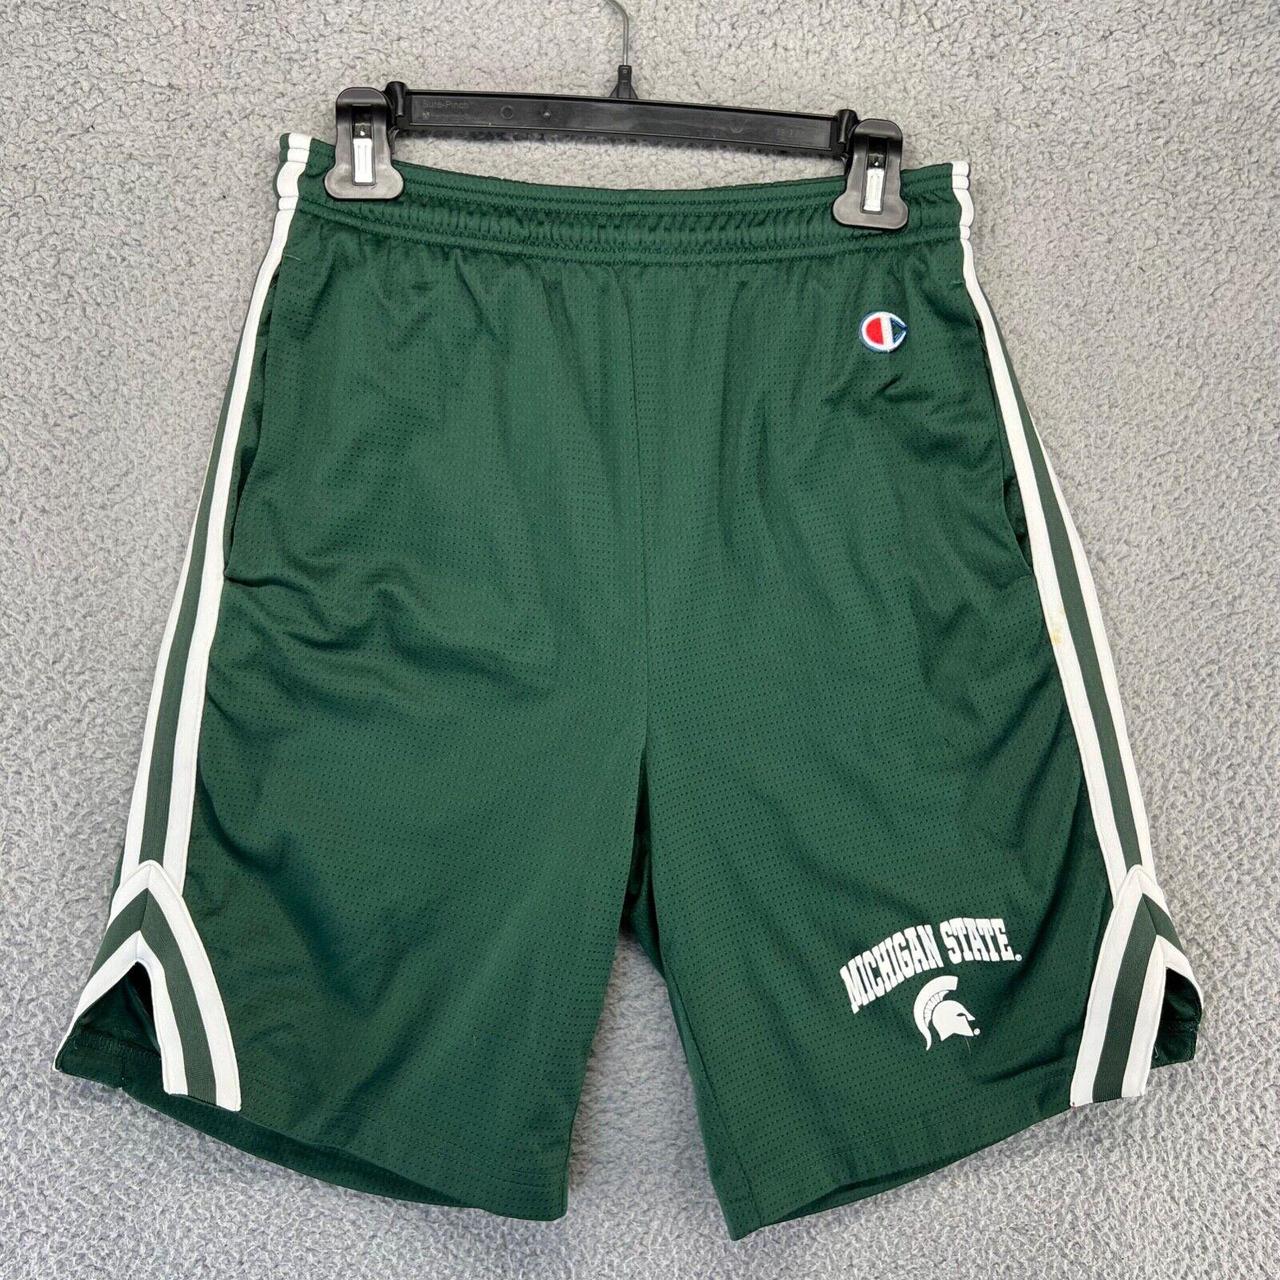 Champion Men's Shorts - Green - M